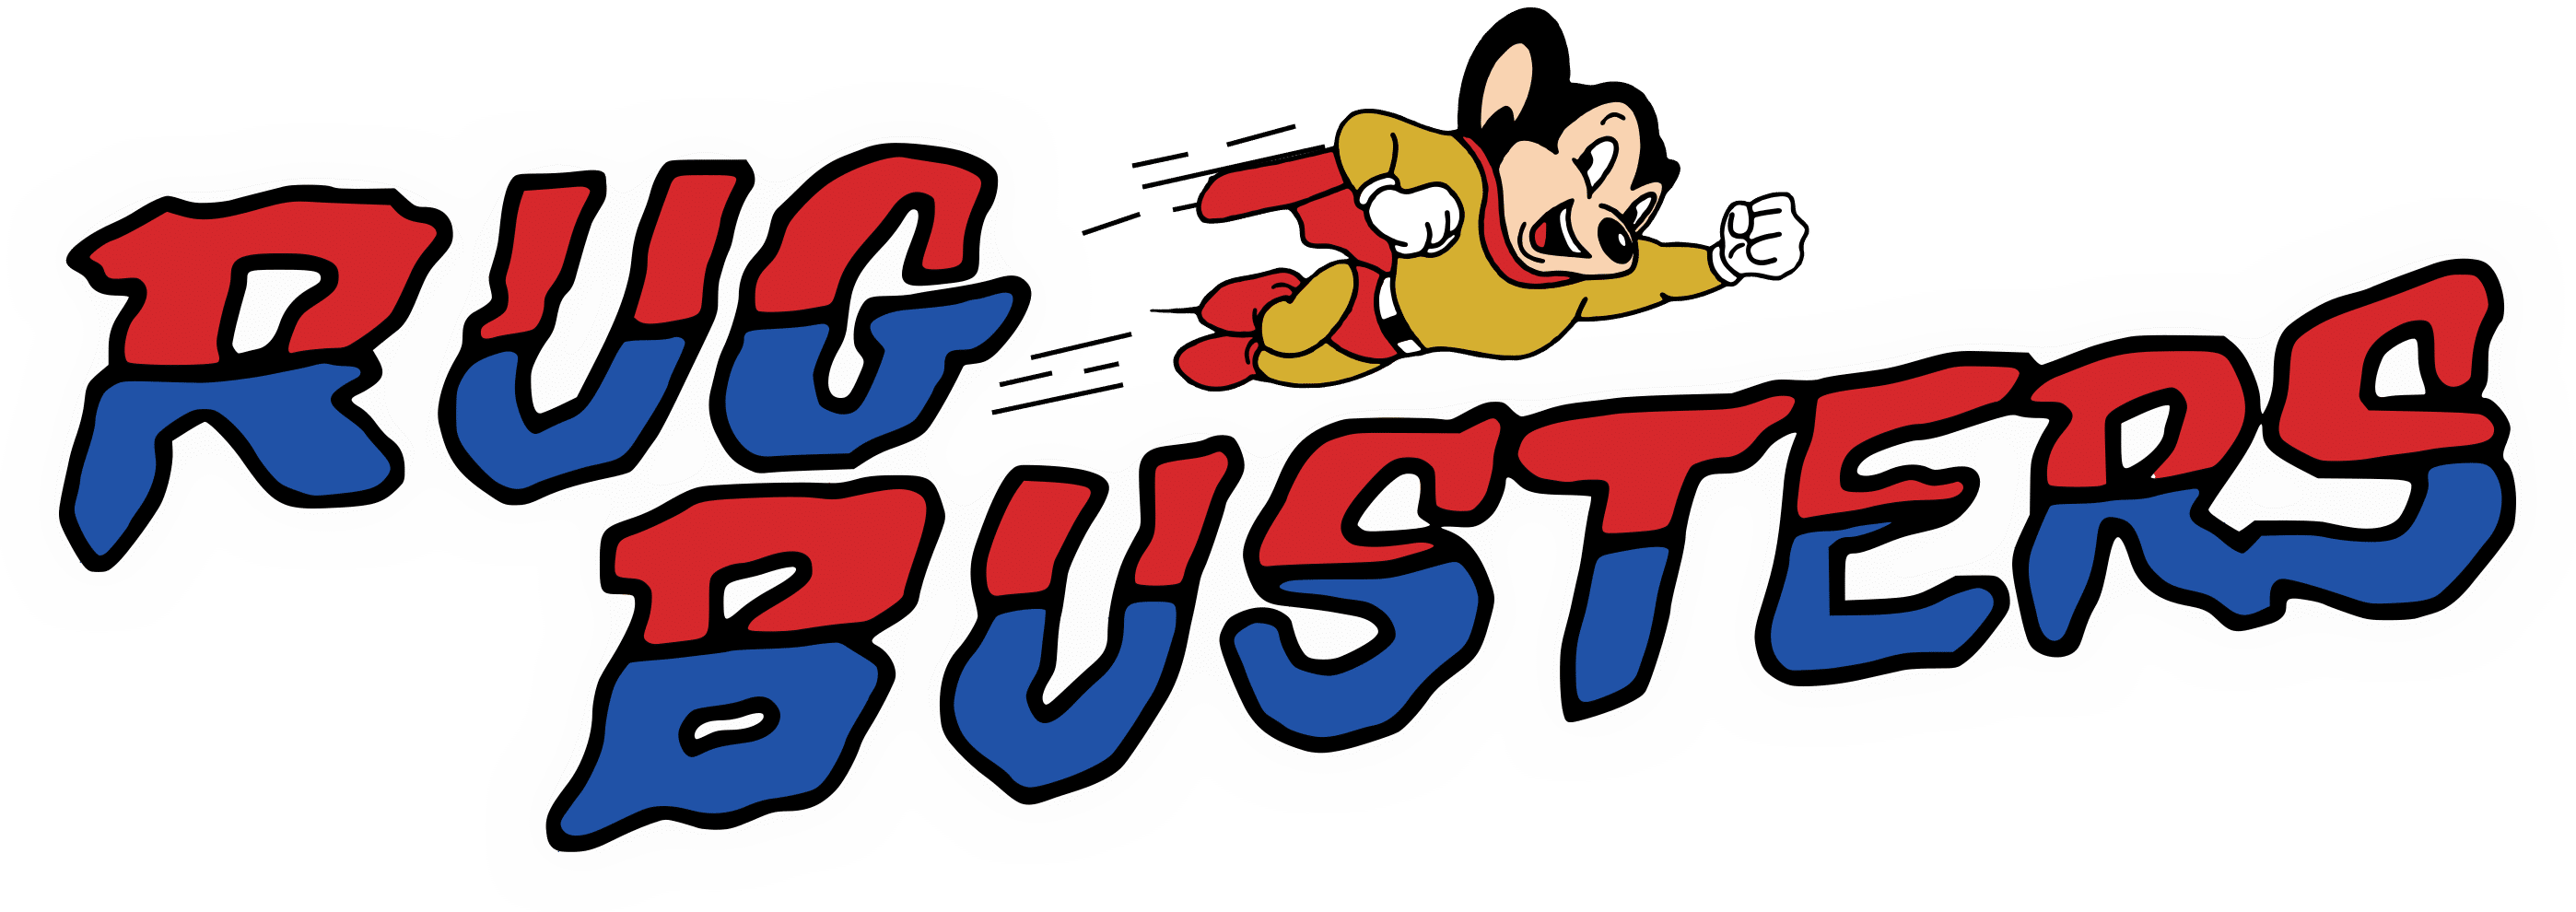 Rug Busters Logo